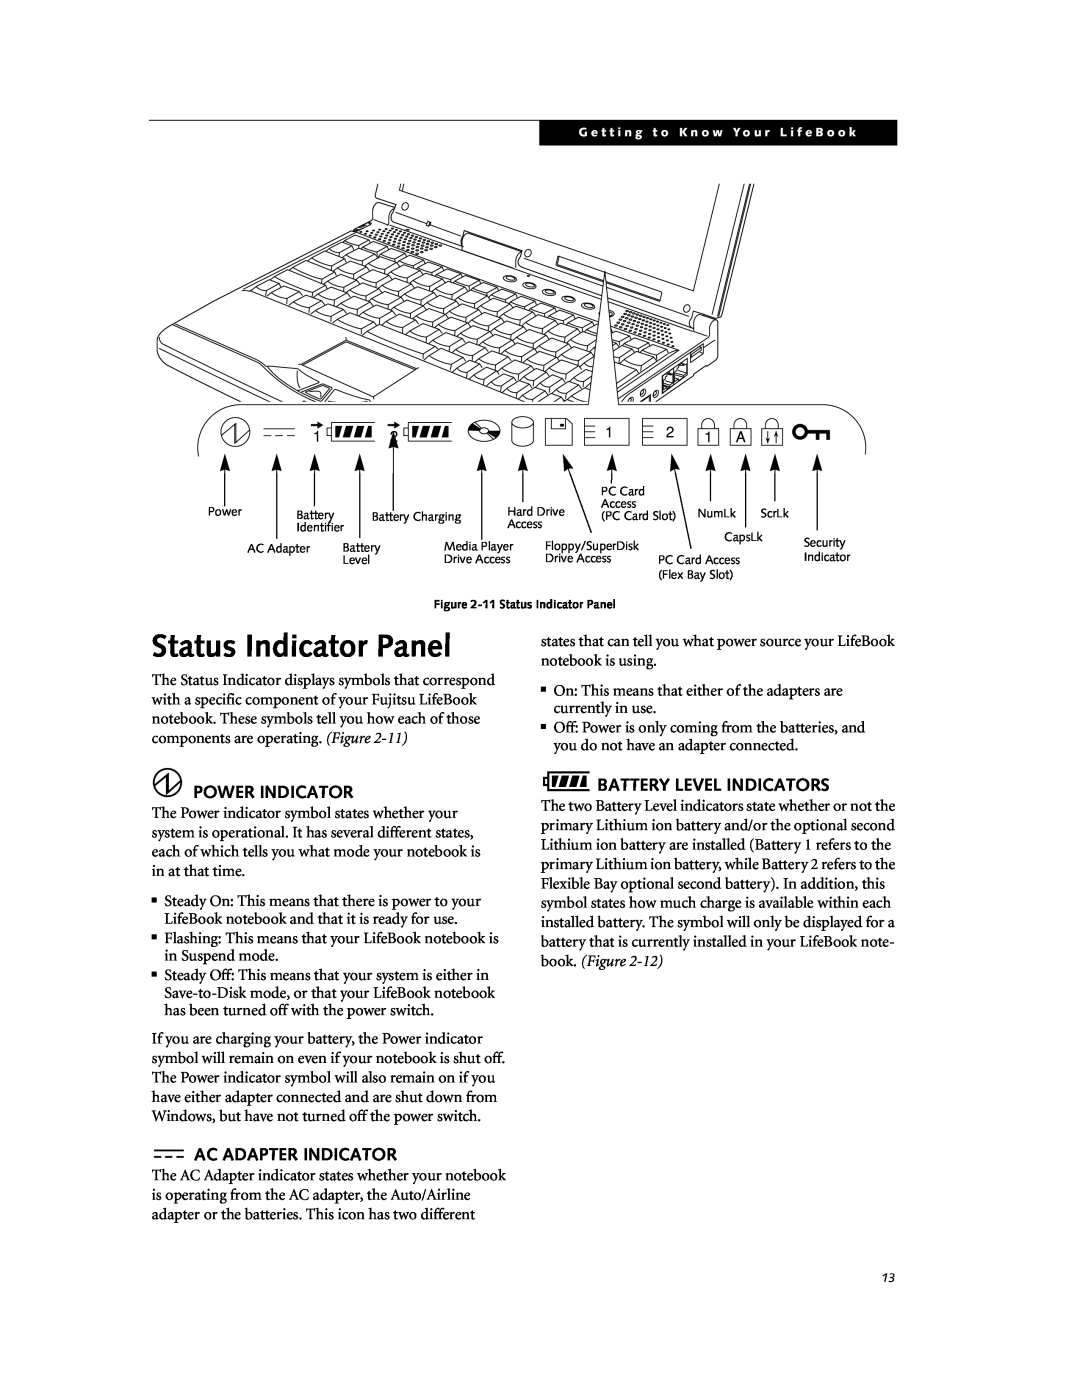 Fujitsu DVD Player manual Status Indicator Panel, Power Indicator, Ac Adapter Indicator, Battery Level Indicators 